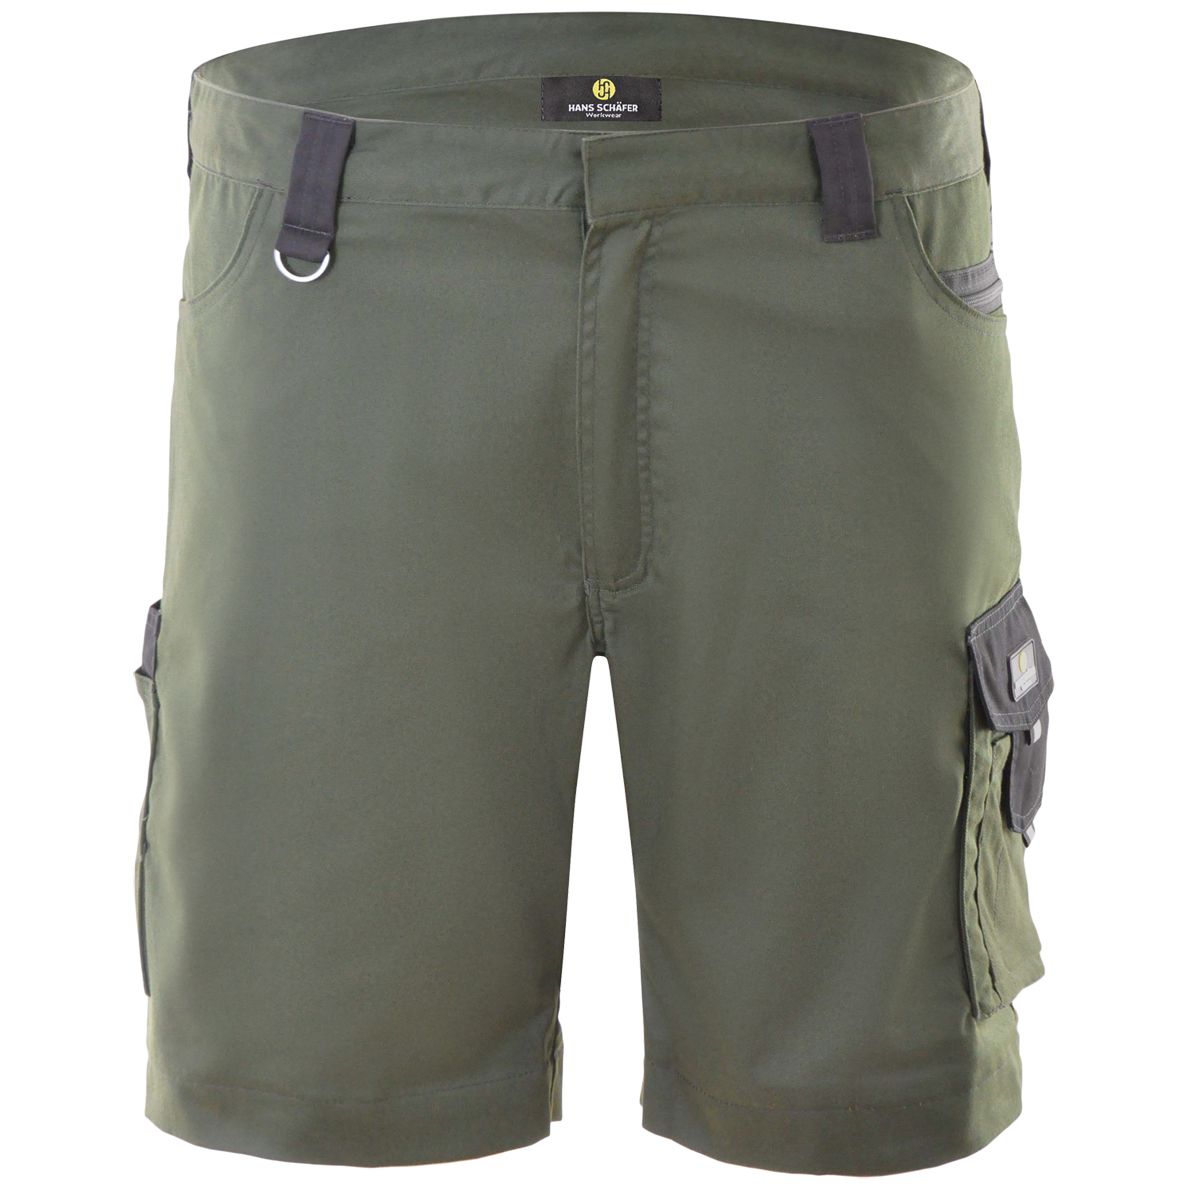 Hans Schäfer work trousers short - Shorts with stretch insert - Cargo bermudas for work - Olive green - 60